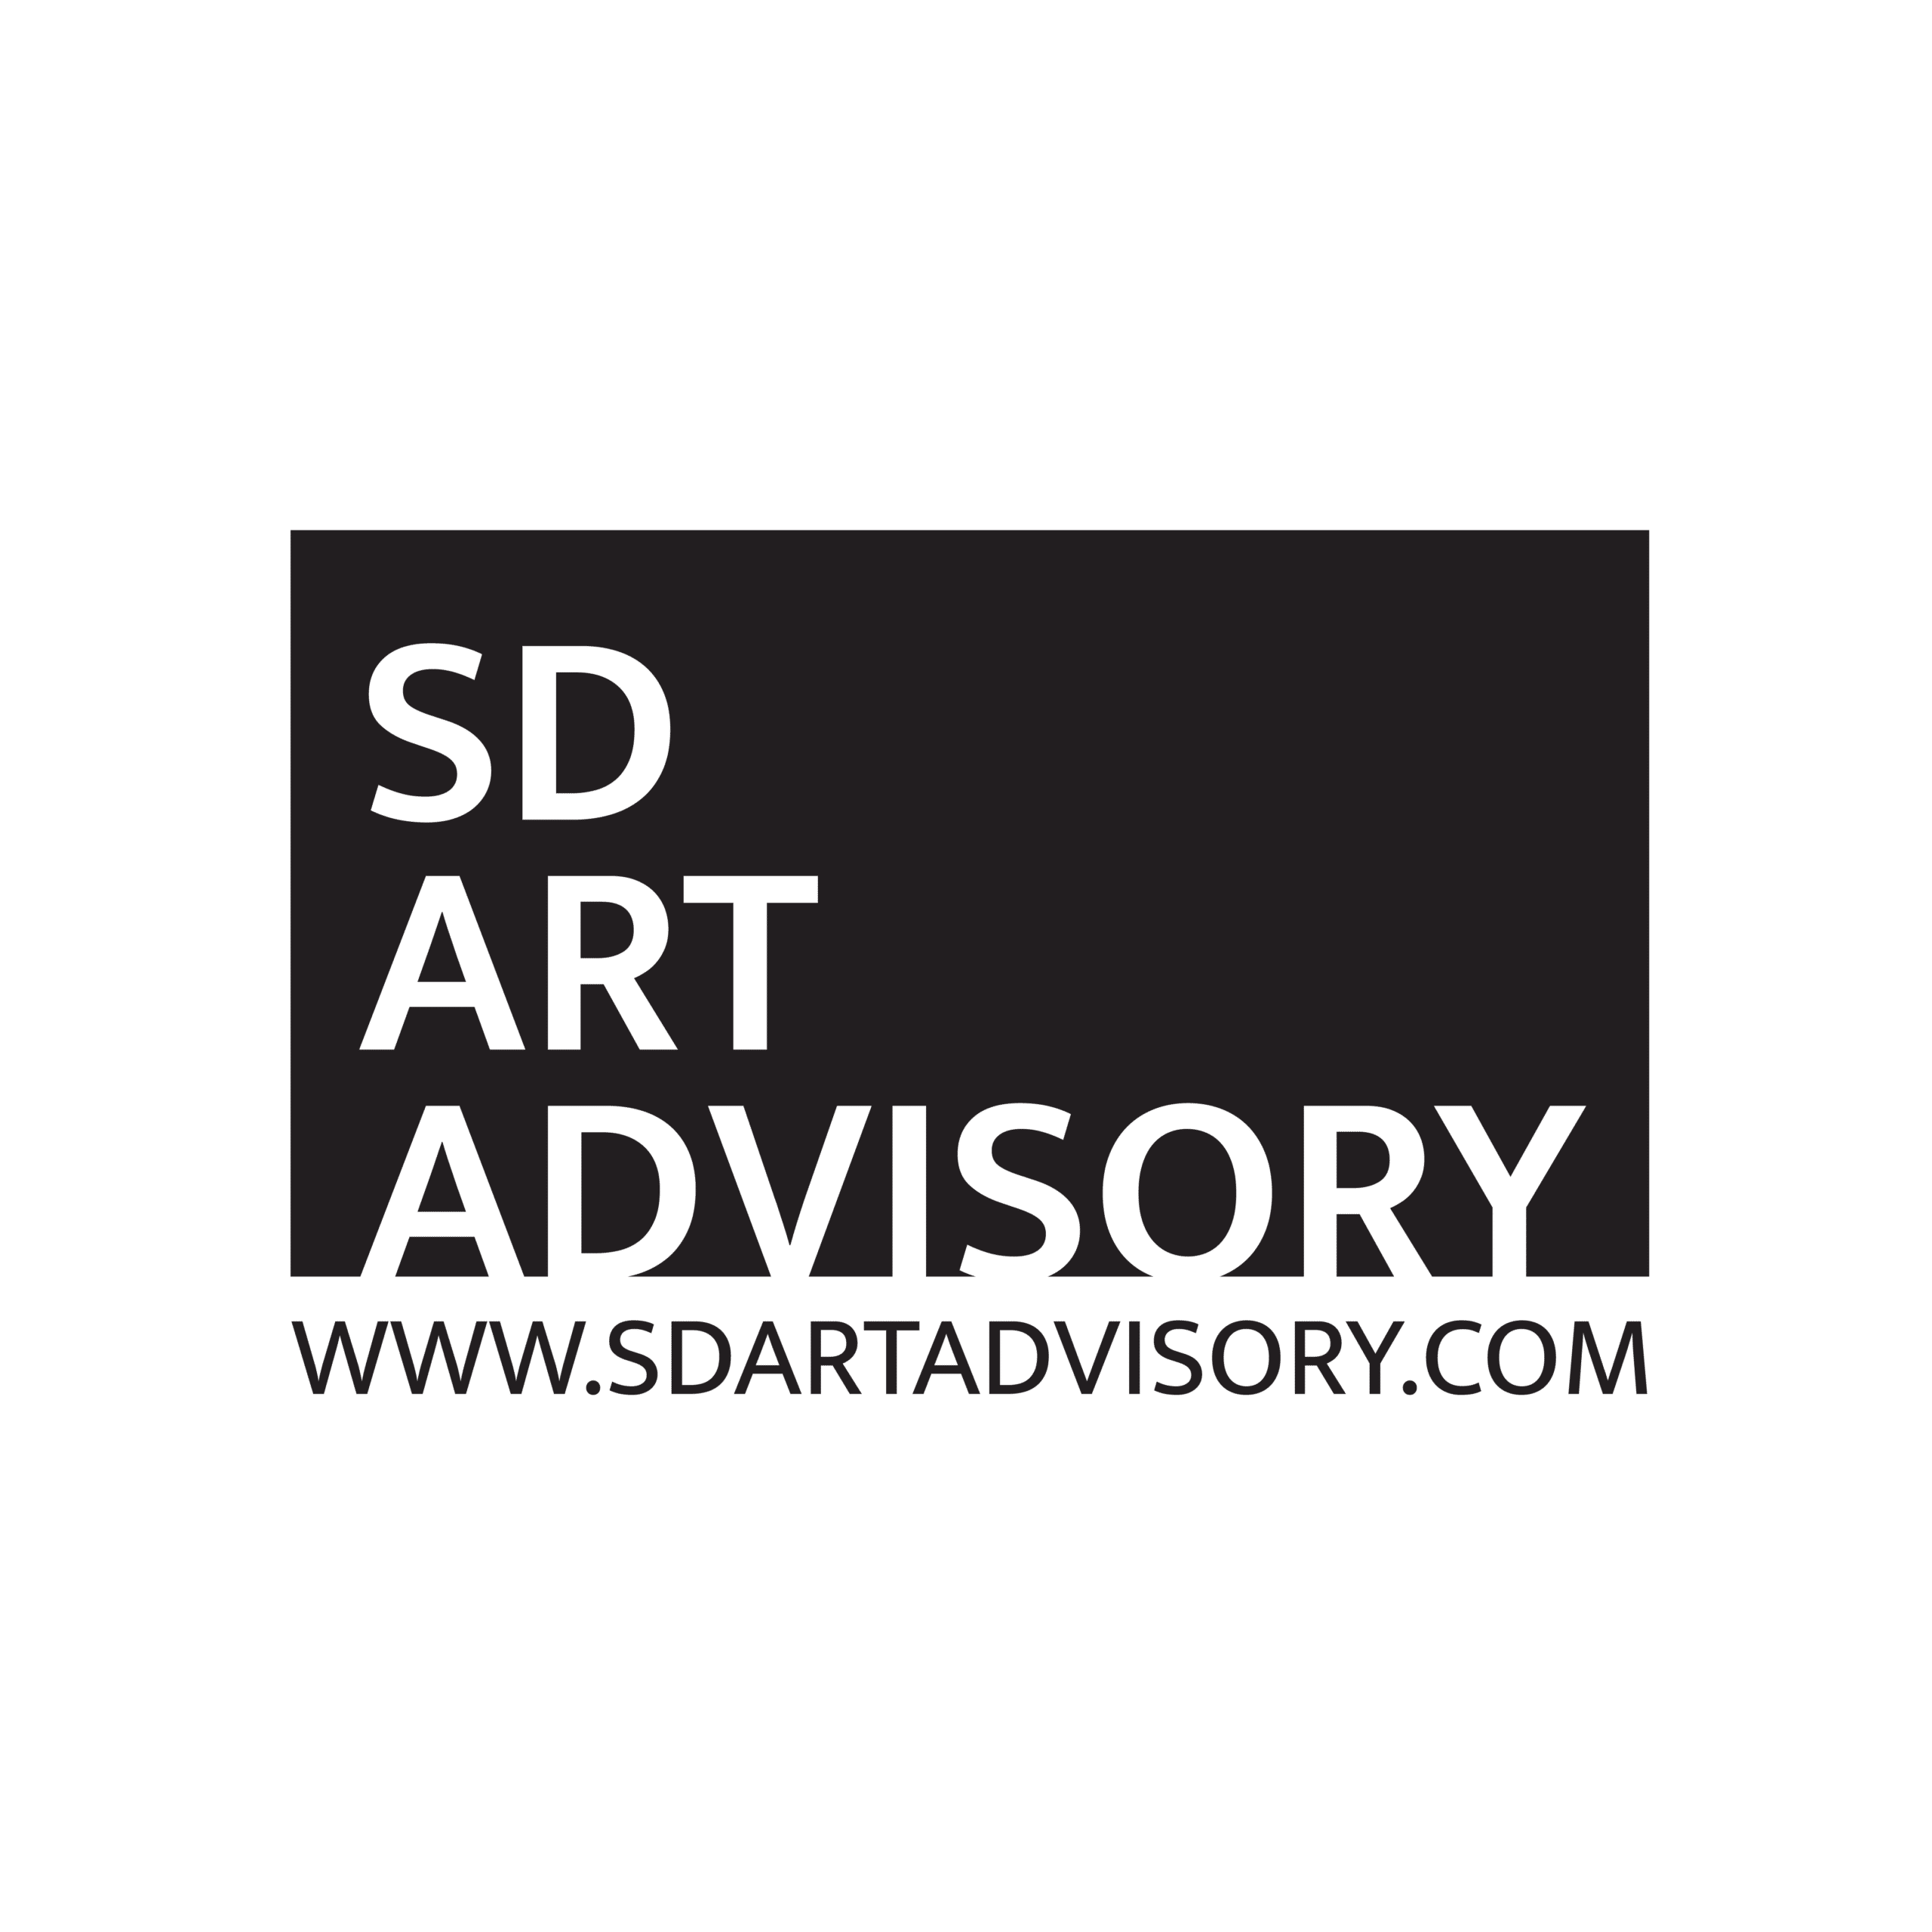 Sd art advisory logo on a green background.